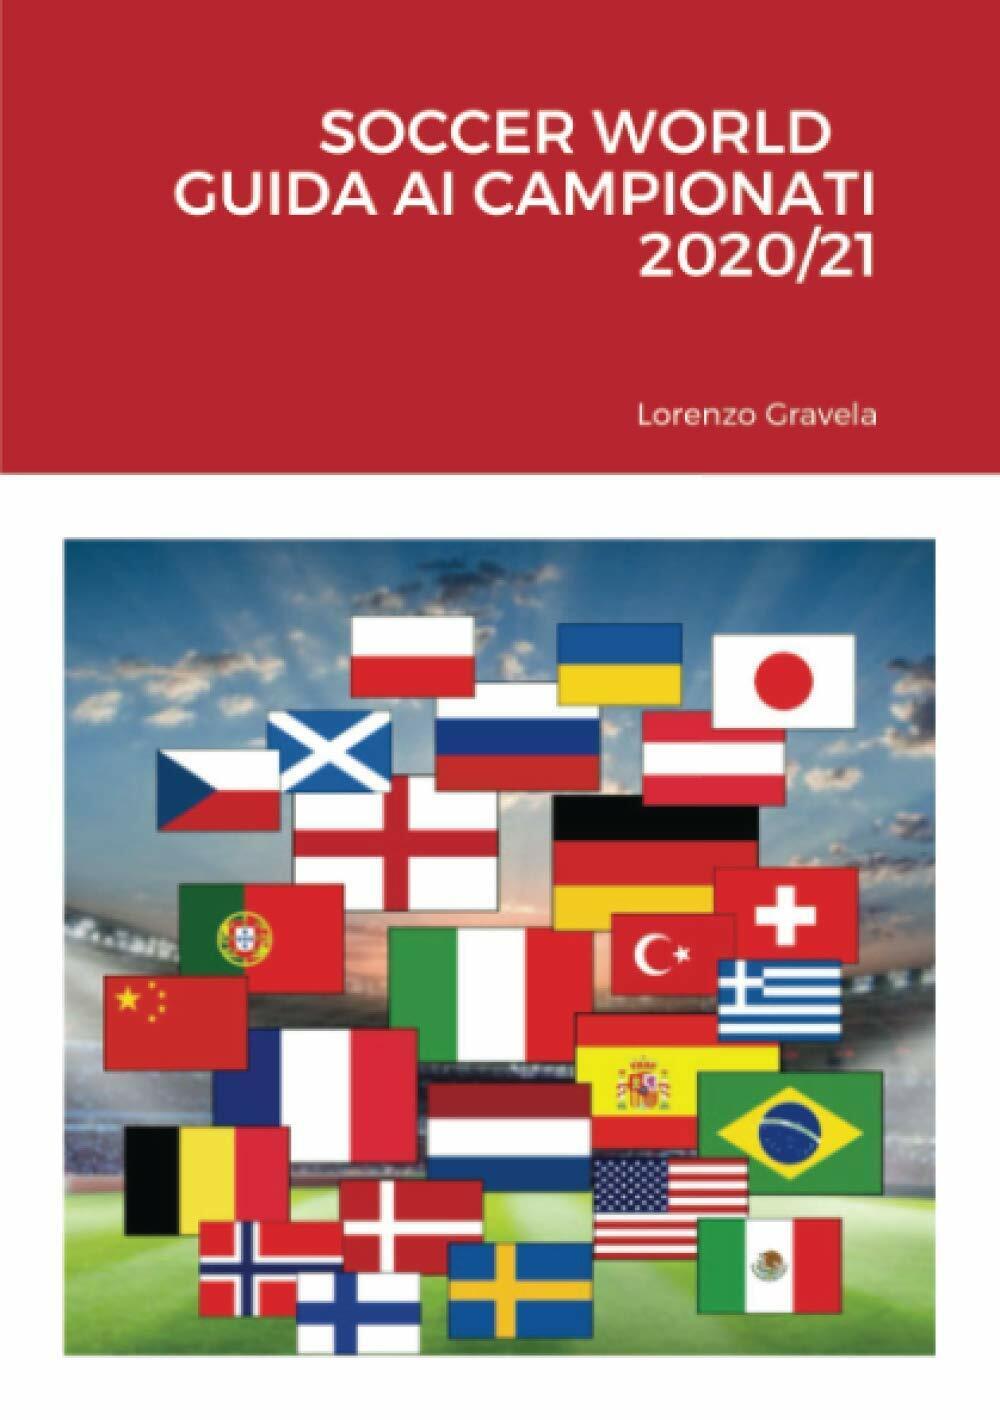 SOCCER WORLD - GUIDA AI CAMPIONATI 2020/21 - Lorenzo Gravela - Lulu.com, 2020